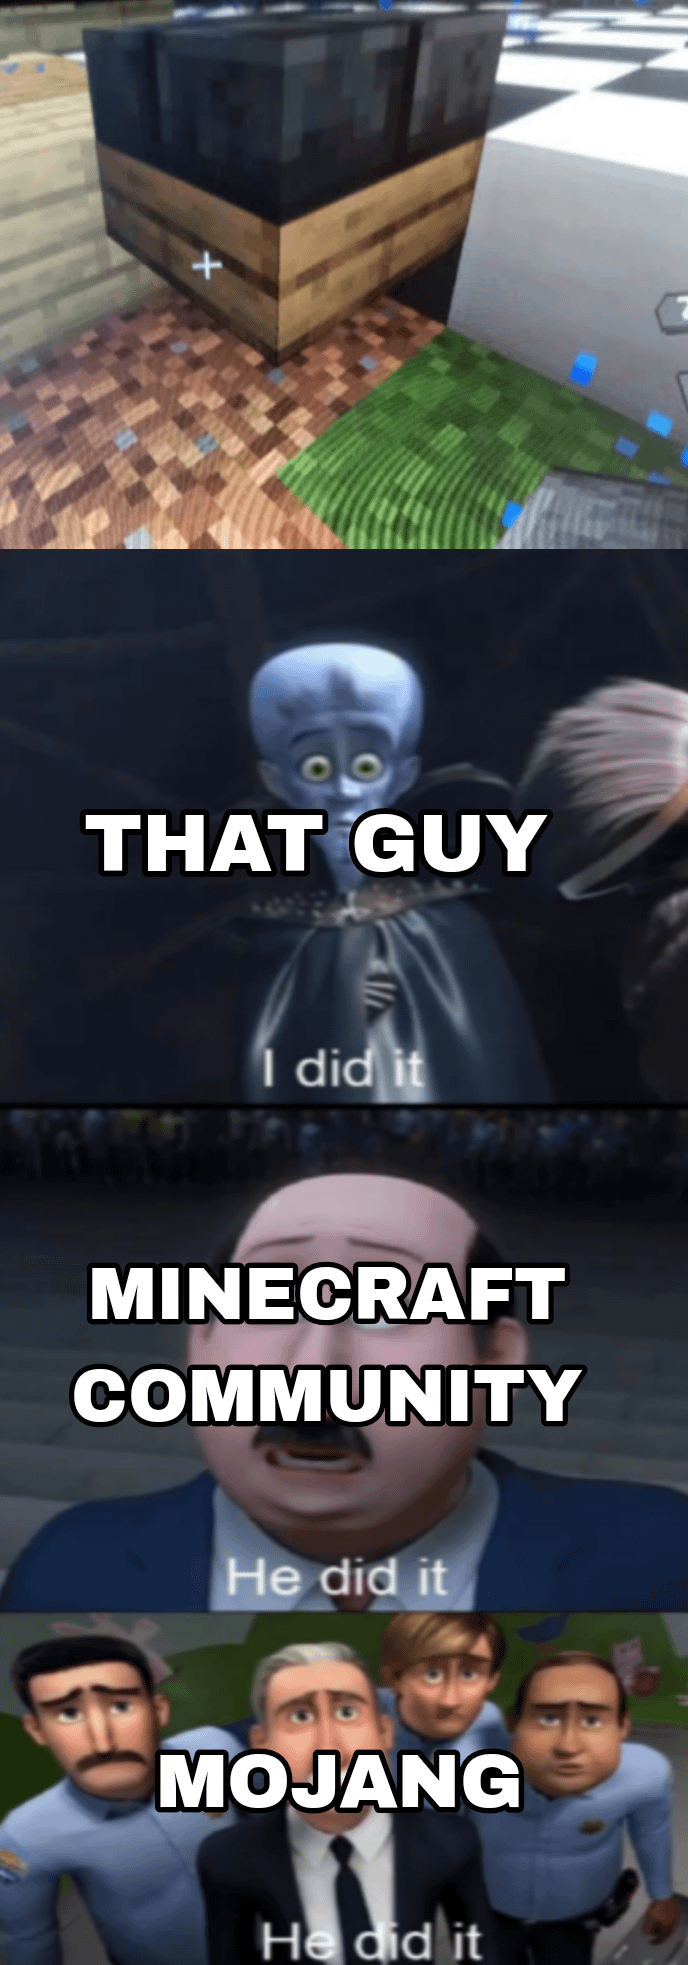 Minecraft Memes - "Incredible Bedrock Banter!"